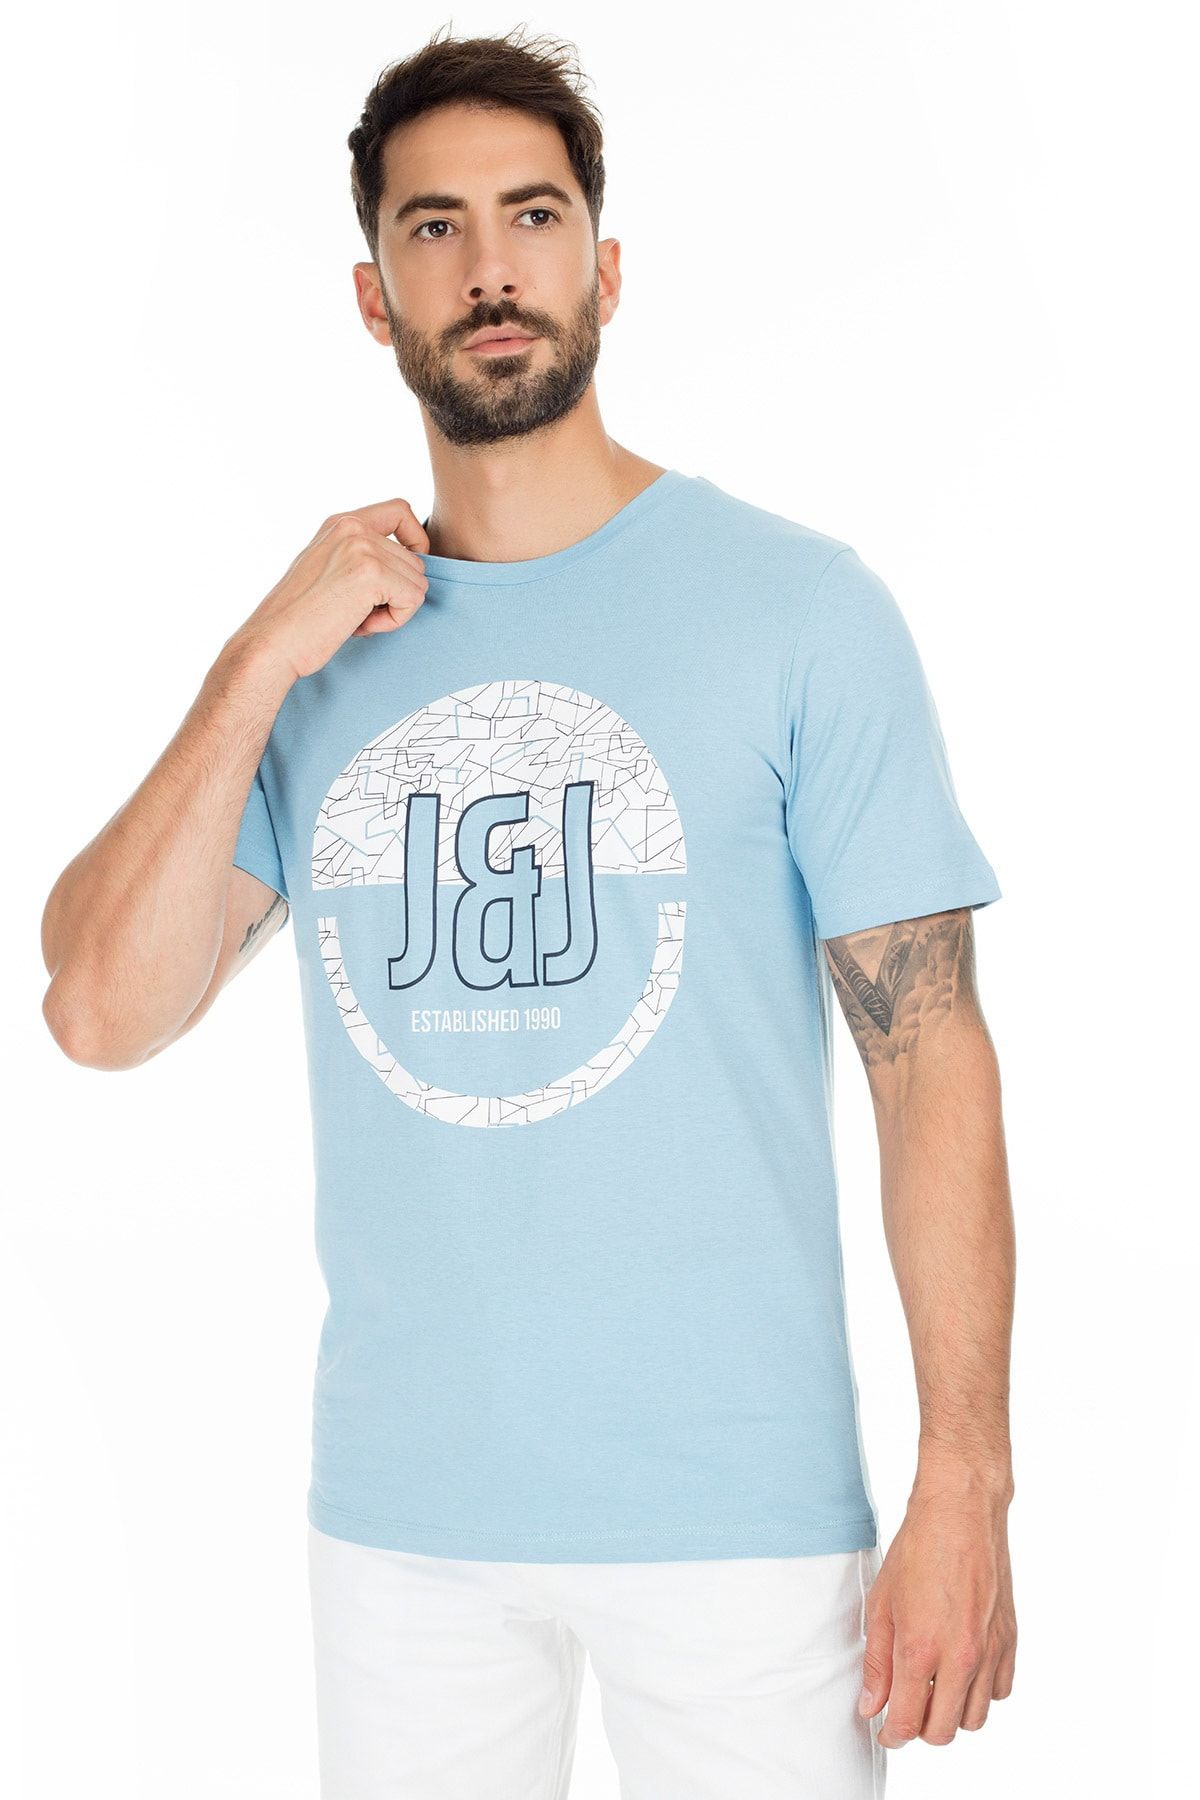 Jack & Jones Slim Fit Core Jcobooster T Shirt ERKEK T SHİRT 12178384